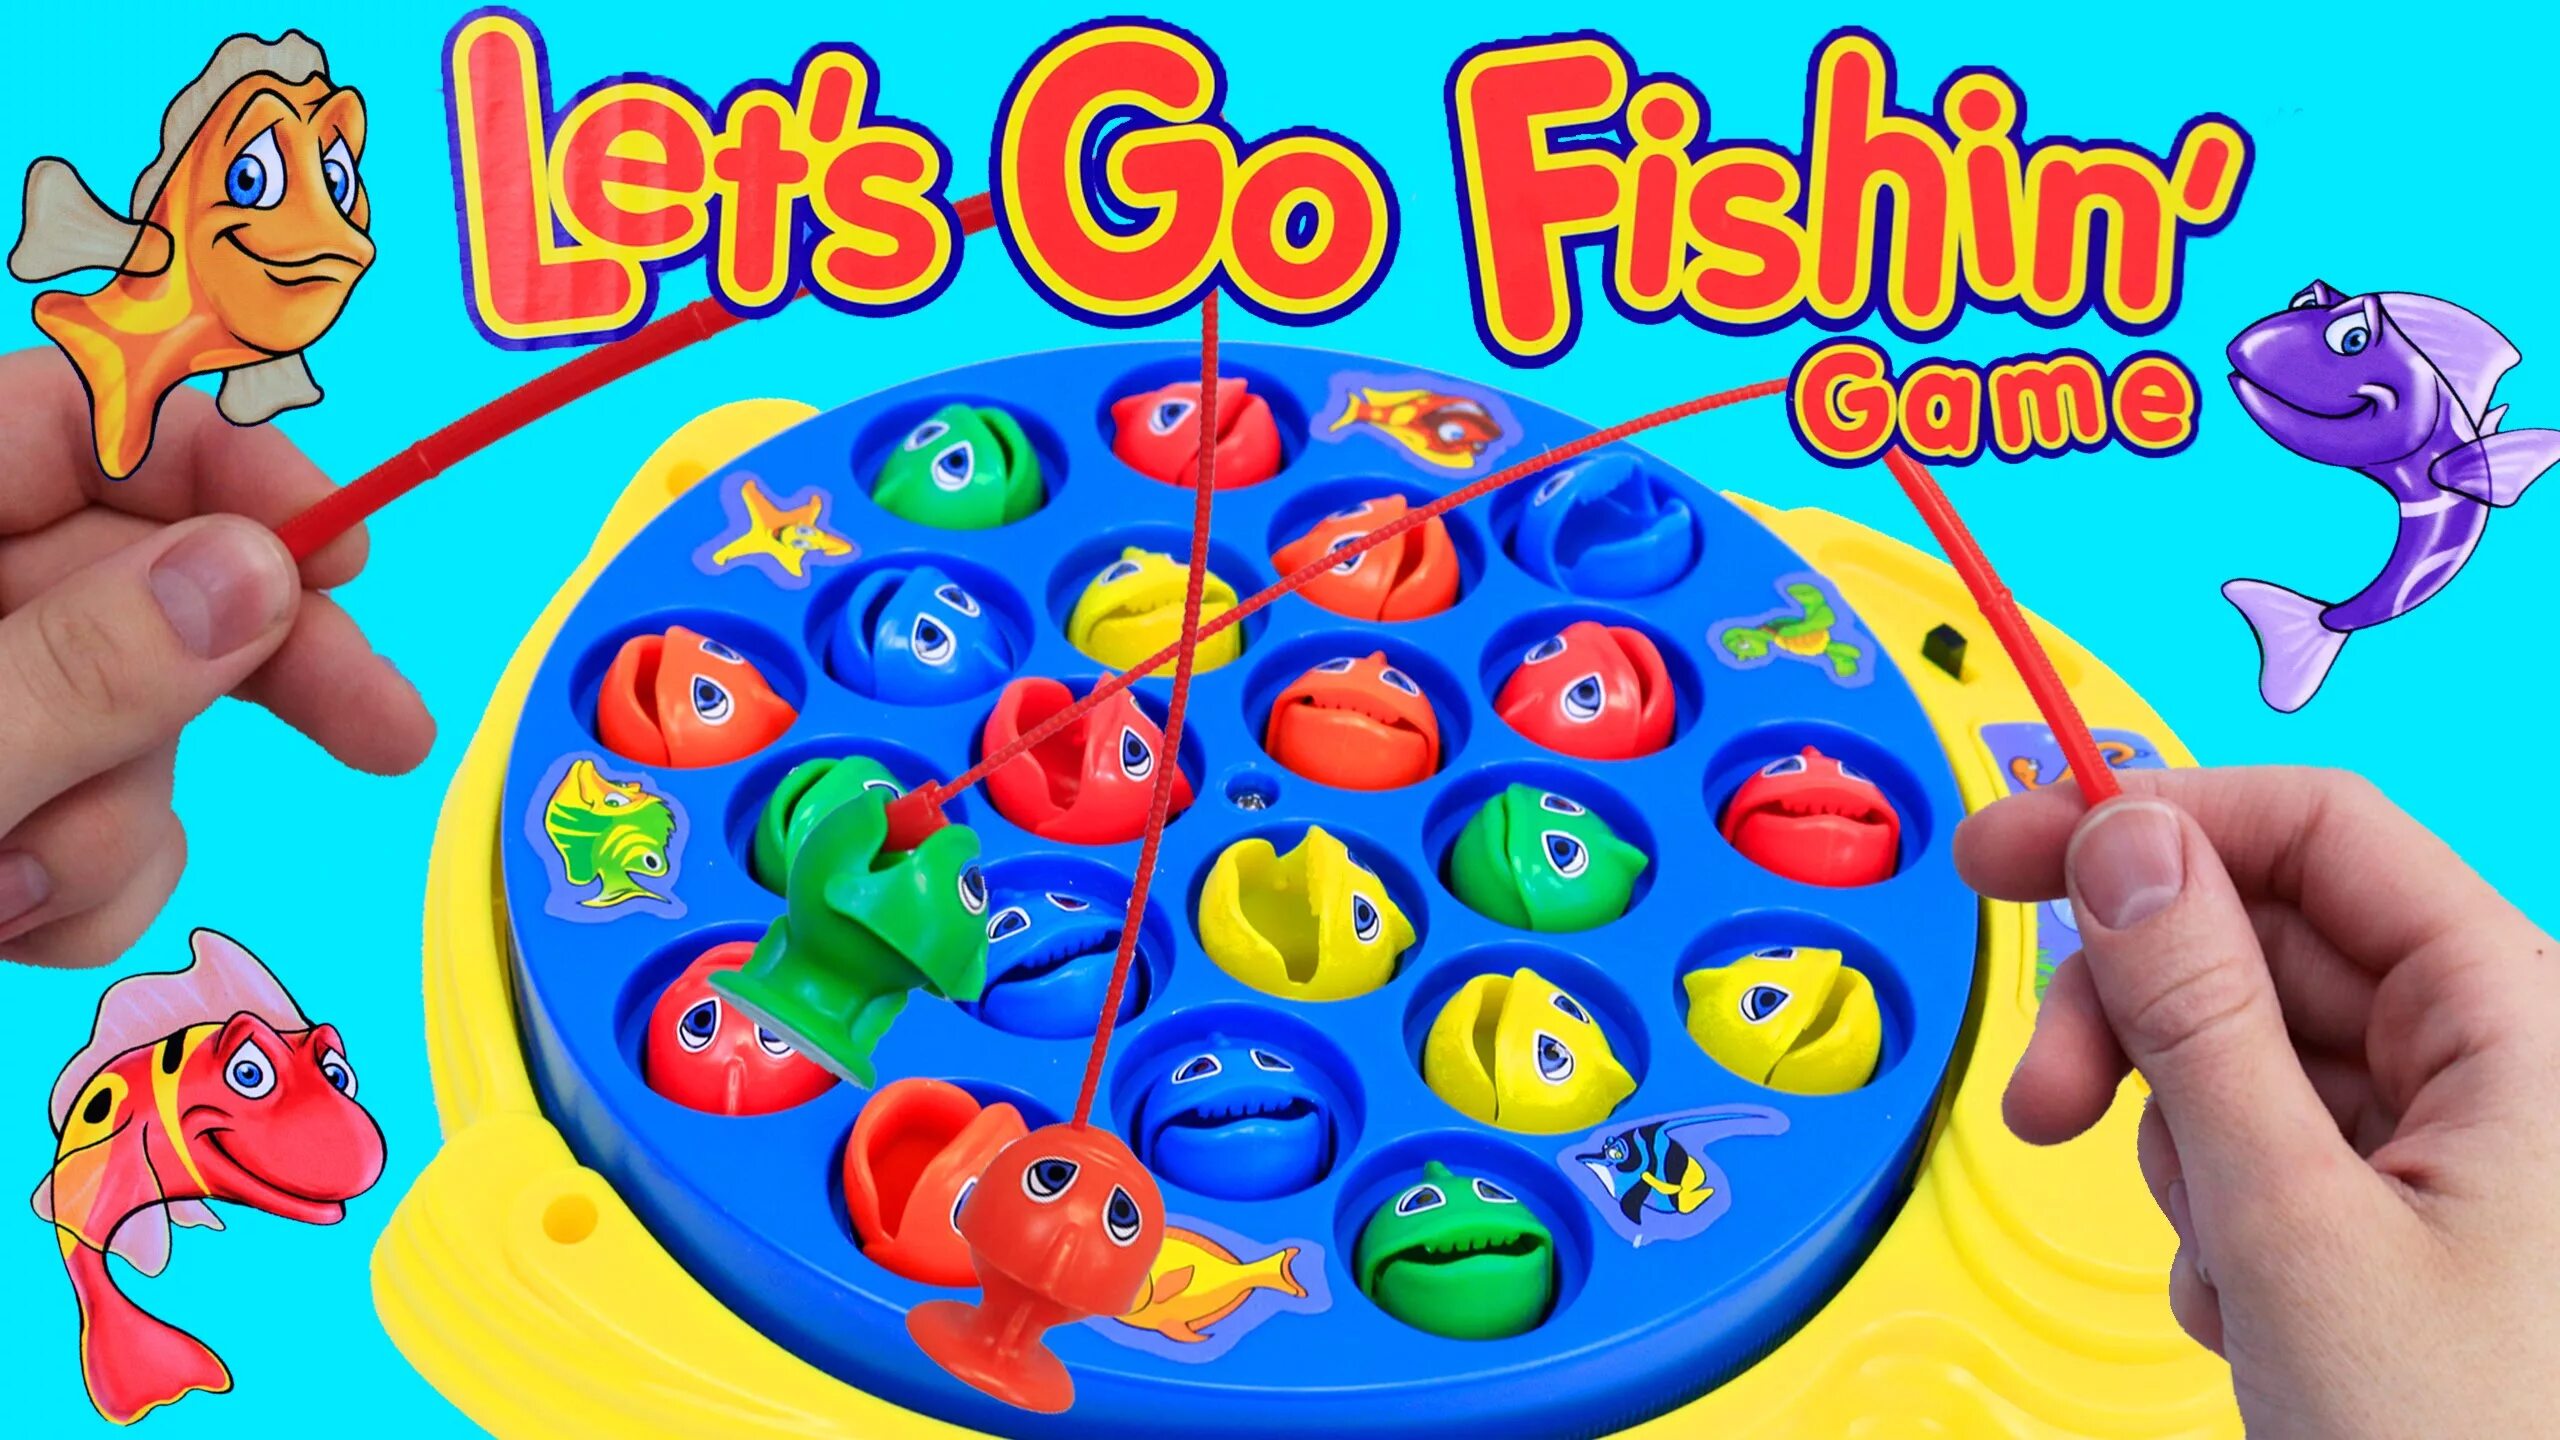 Игра lets go. Игра рыбалка. Go Fishing игра. Новая игрушка рыбалка. Игра рыбалка для детей.